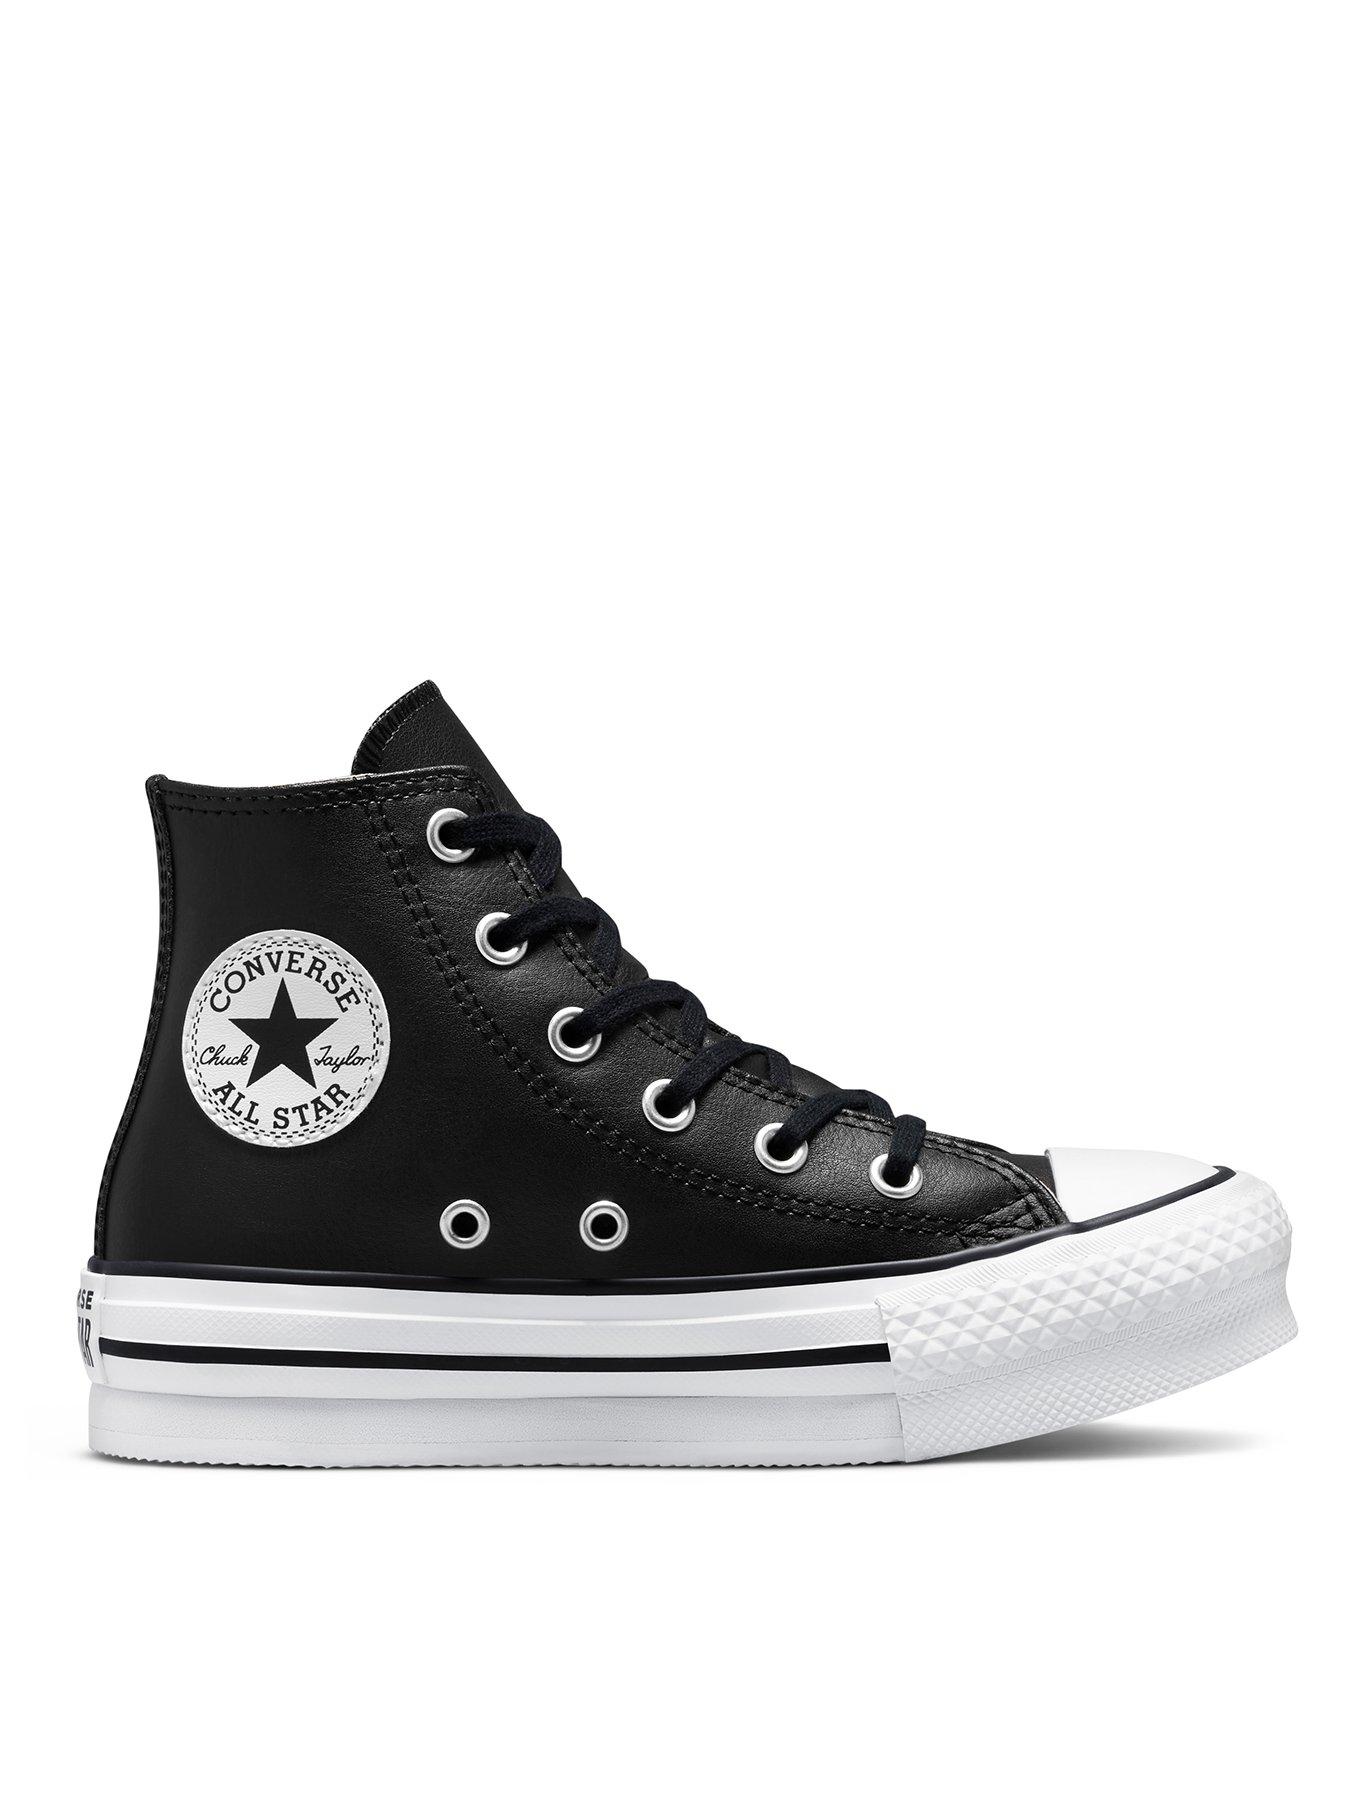 Converse Kids Girls Leather EVA Lift Hi Top Trainers - Black/White, Black, Size 11